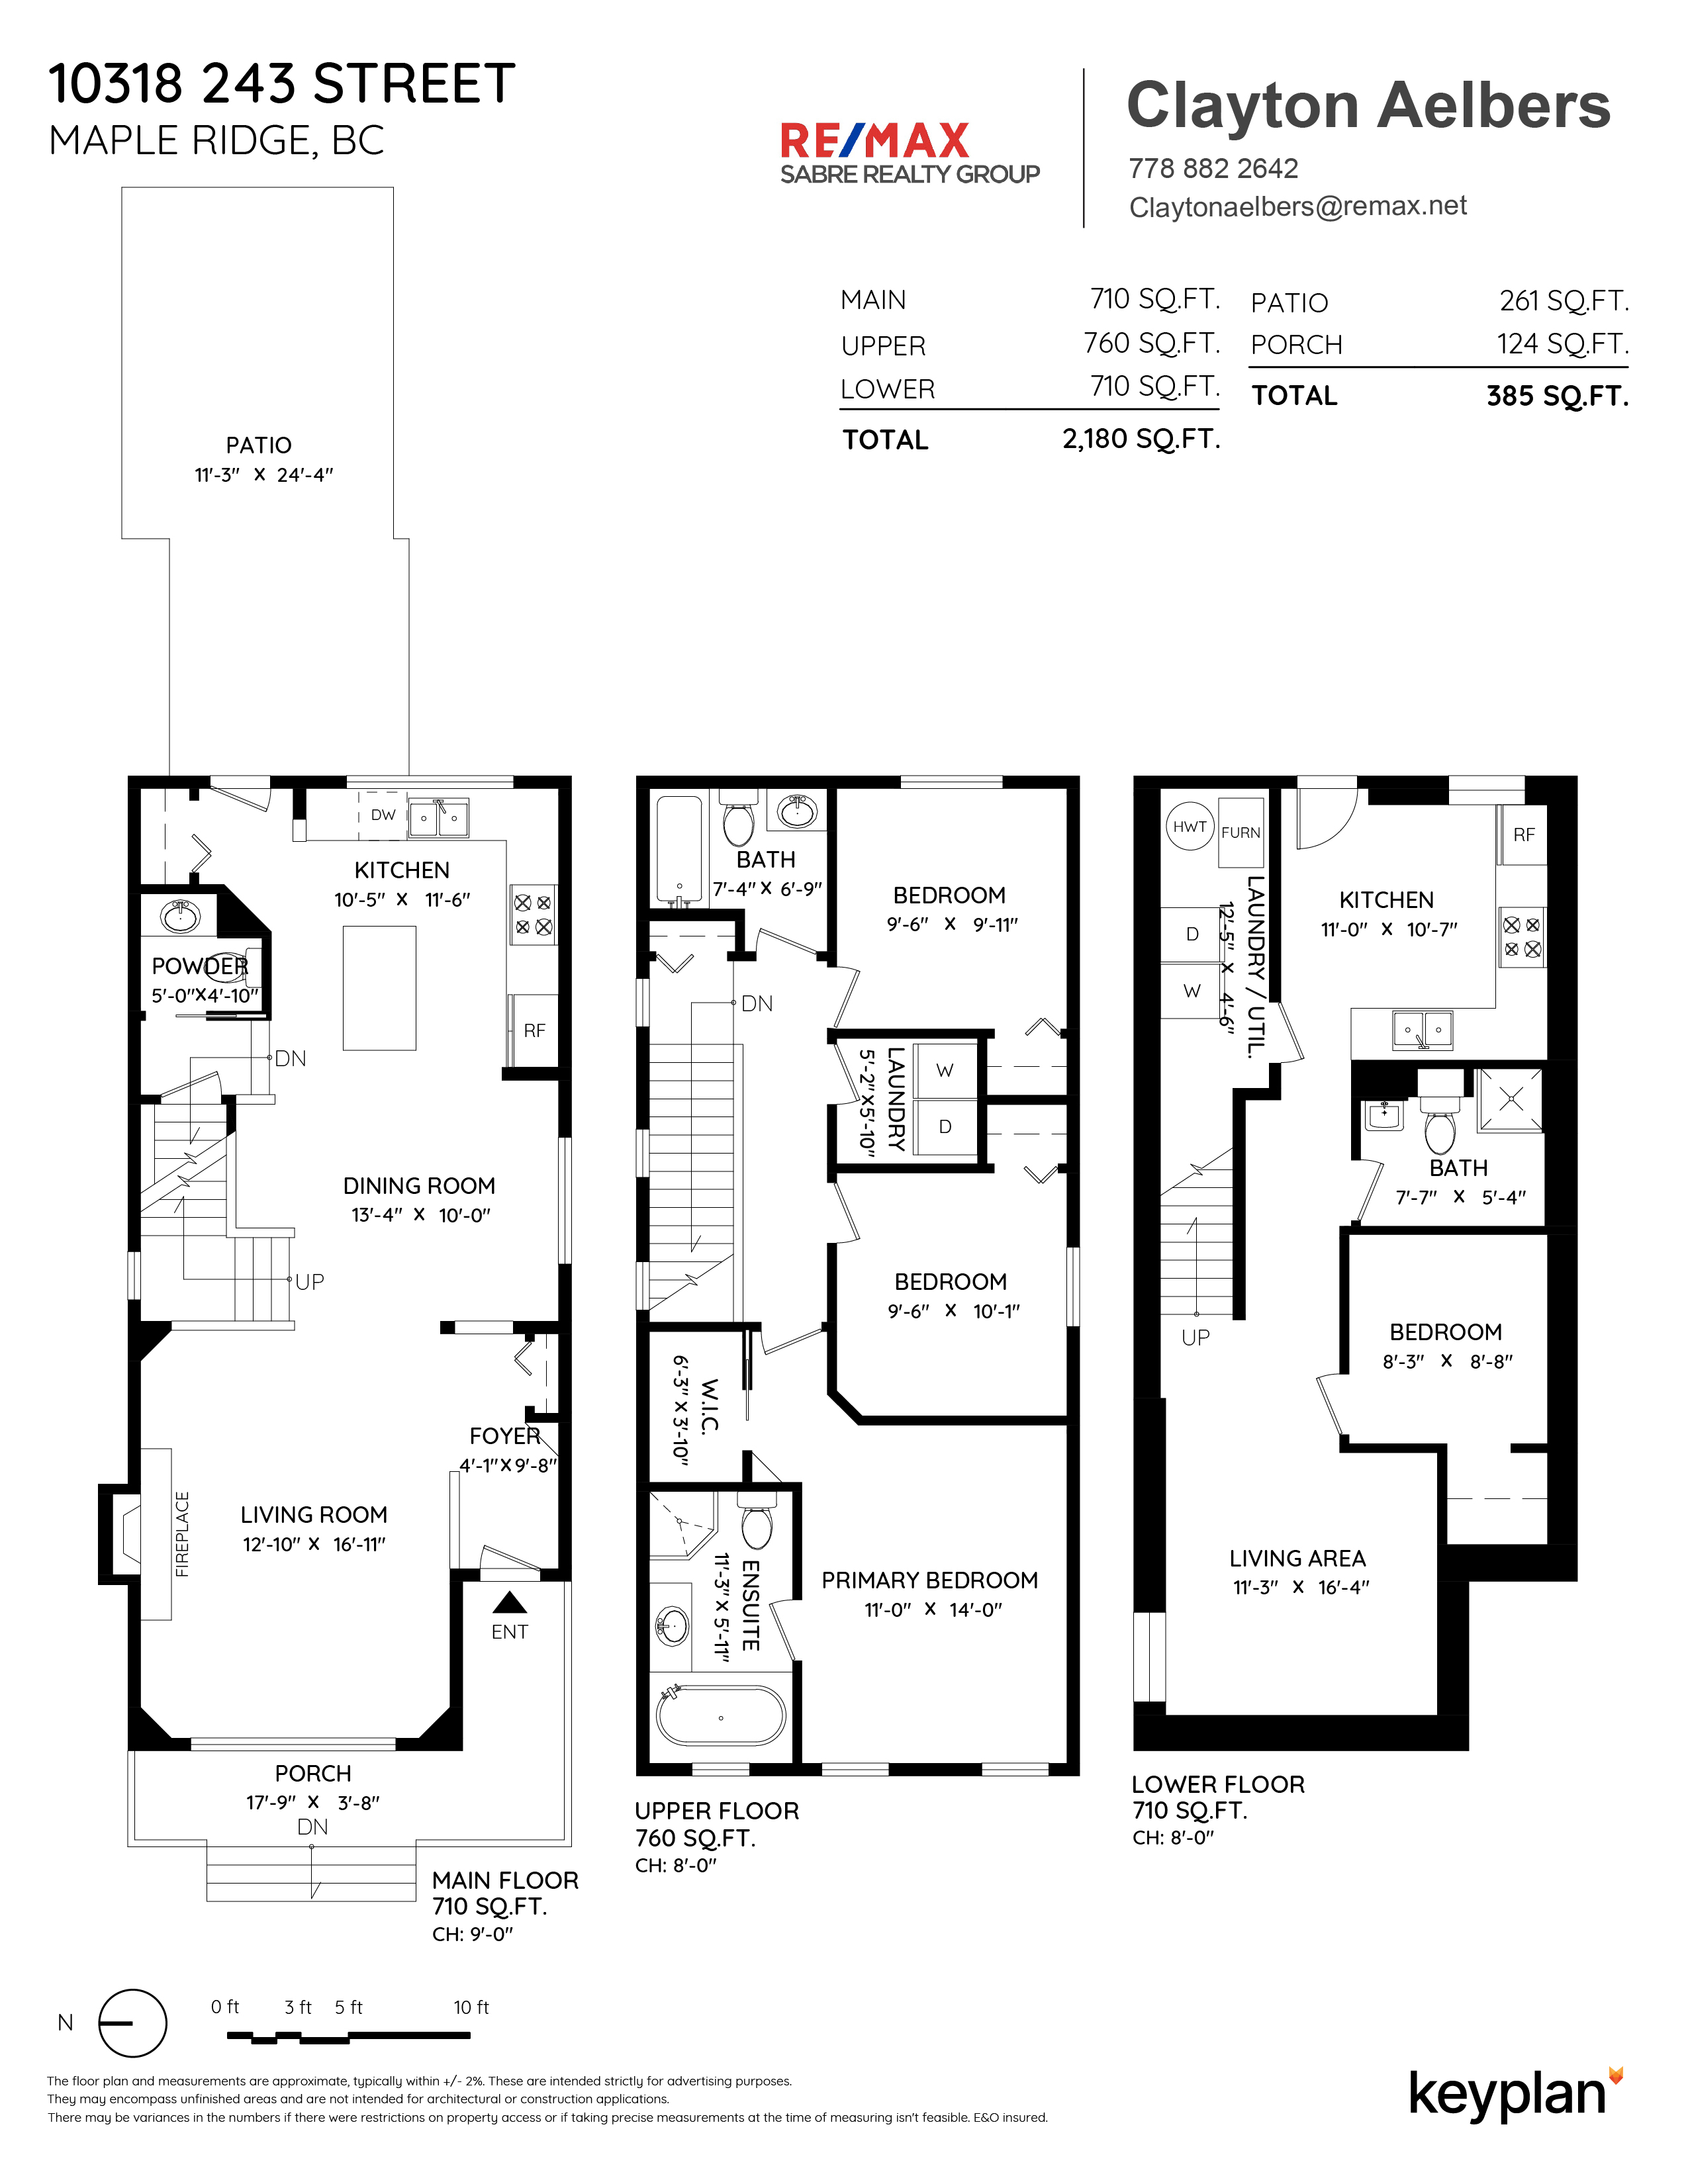 Clayton Aelbers - 10318 243 Street, Maple Ridge, BC, Canada | Floor Plan 1